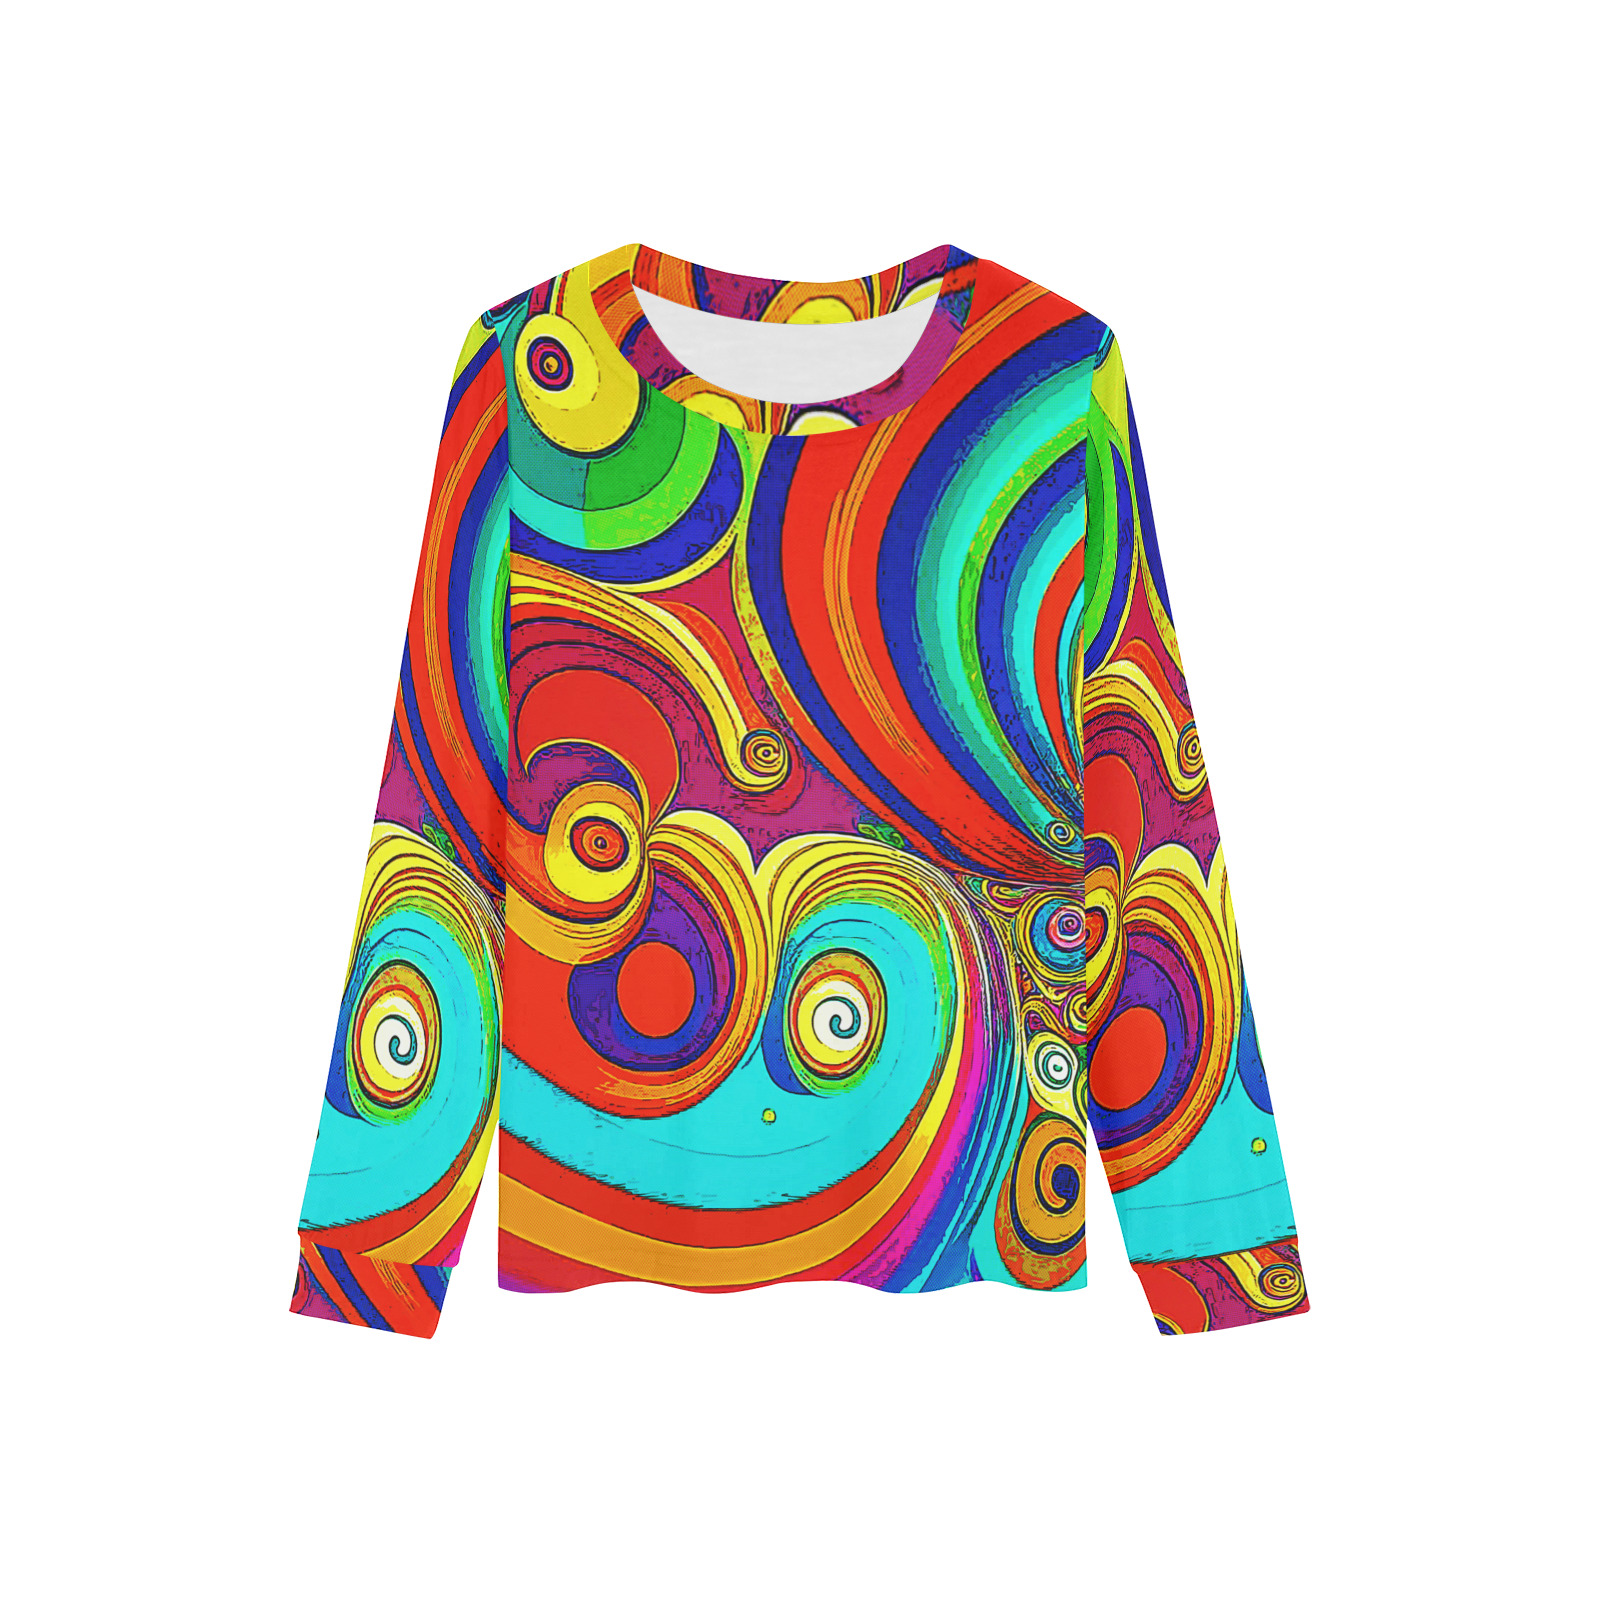 Colorful Groovy Rainbow Swirls Kids' All Over Print Pajama Top